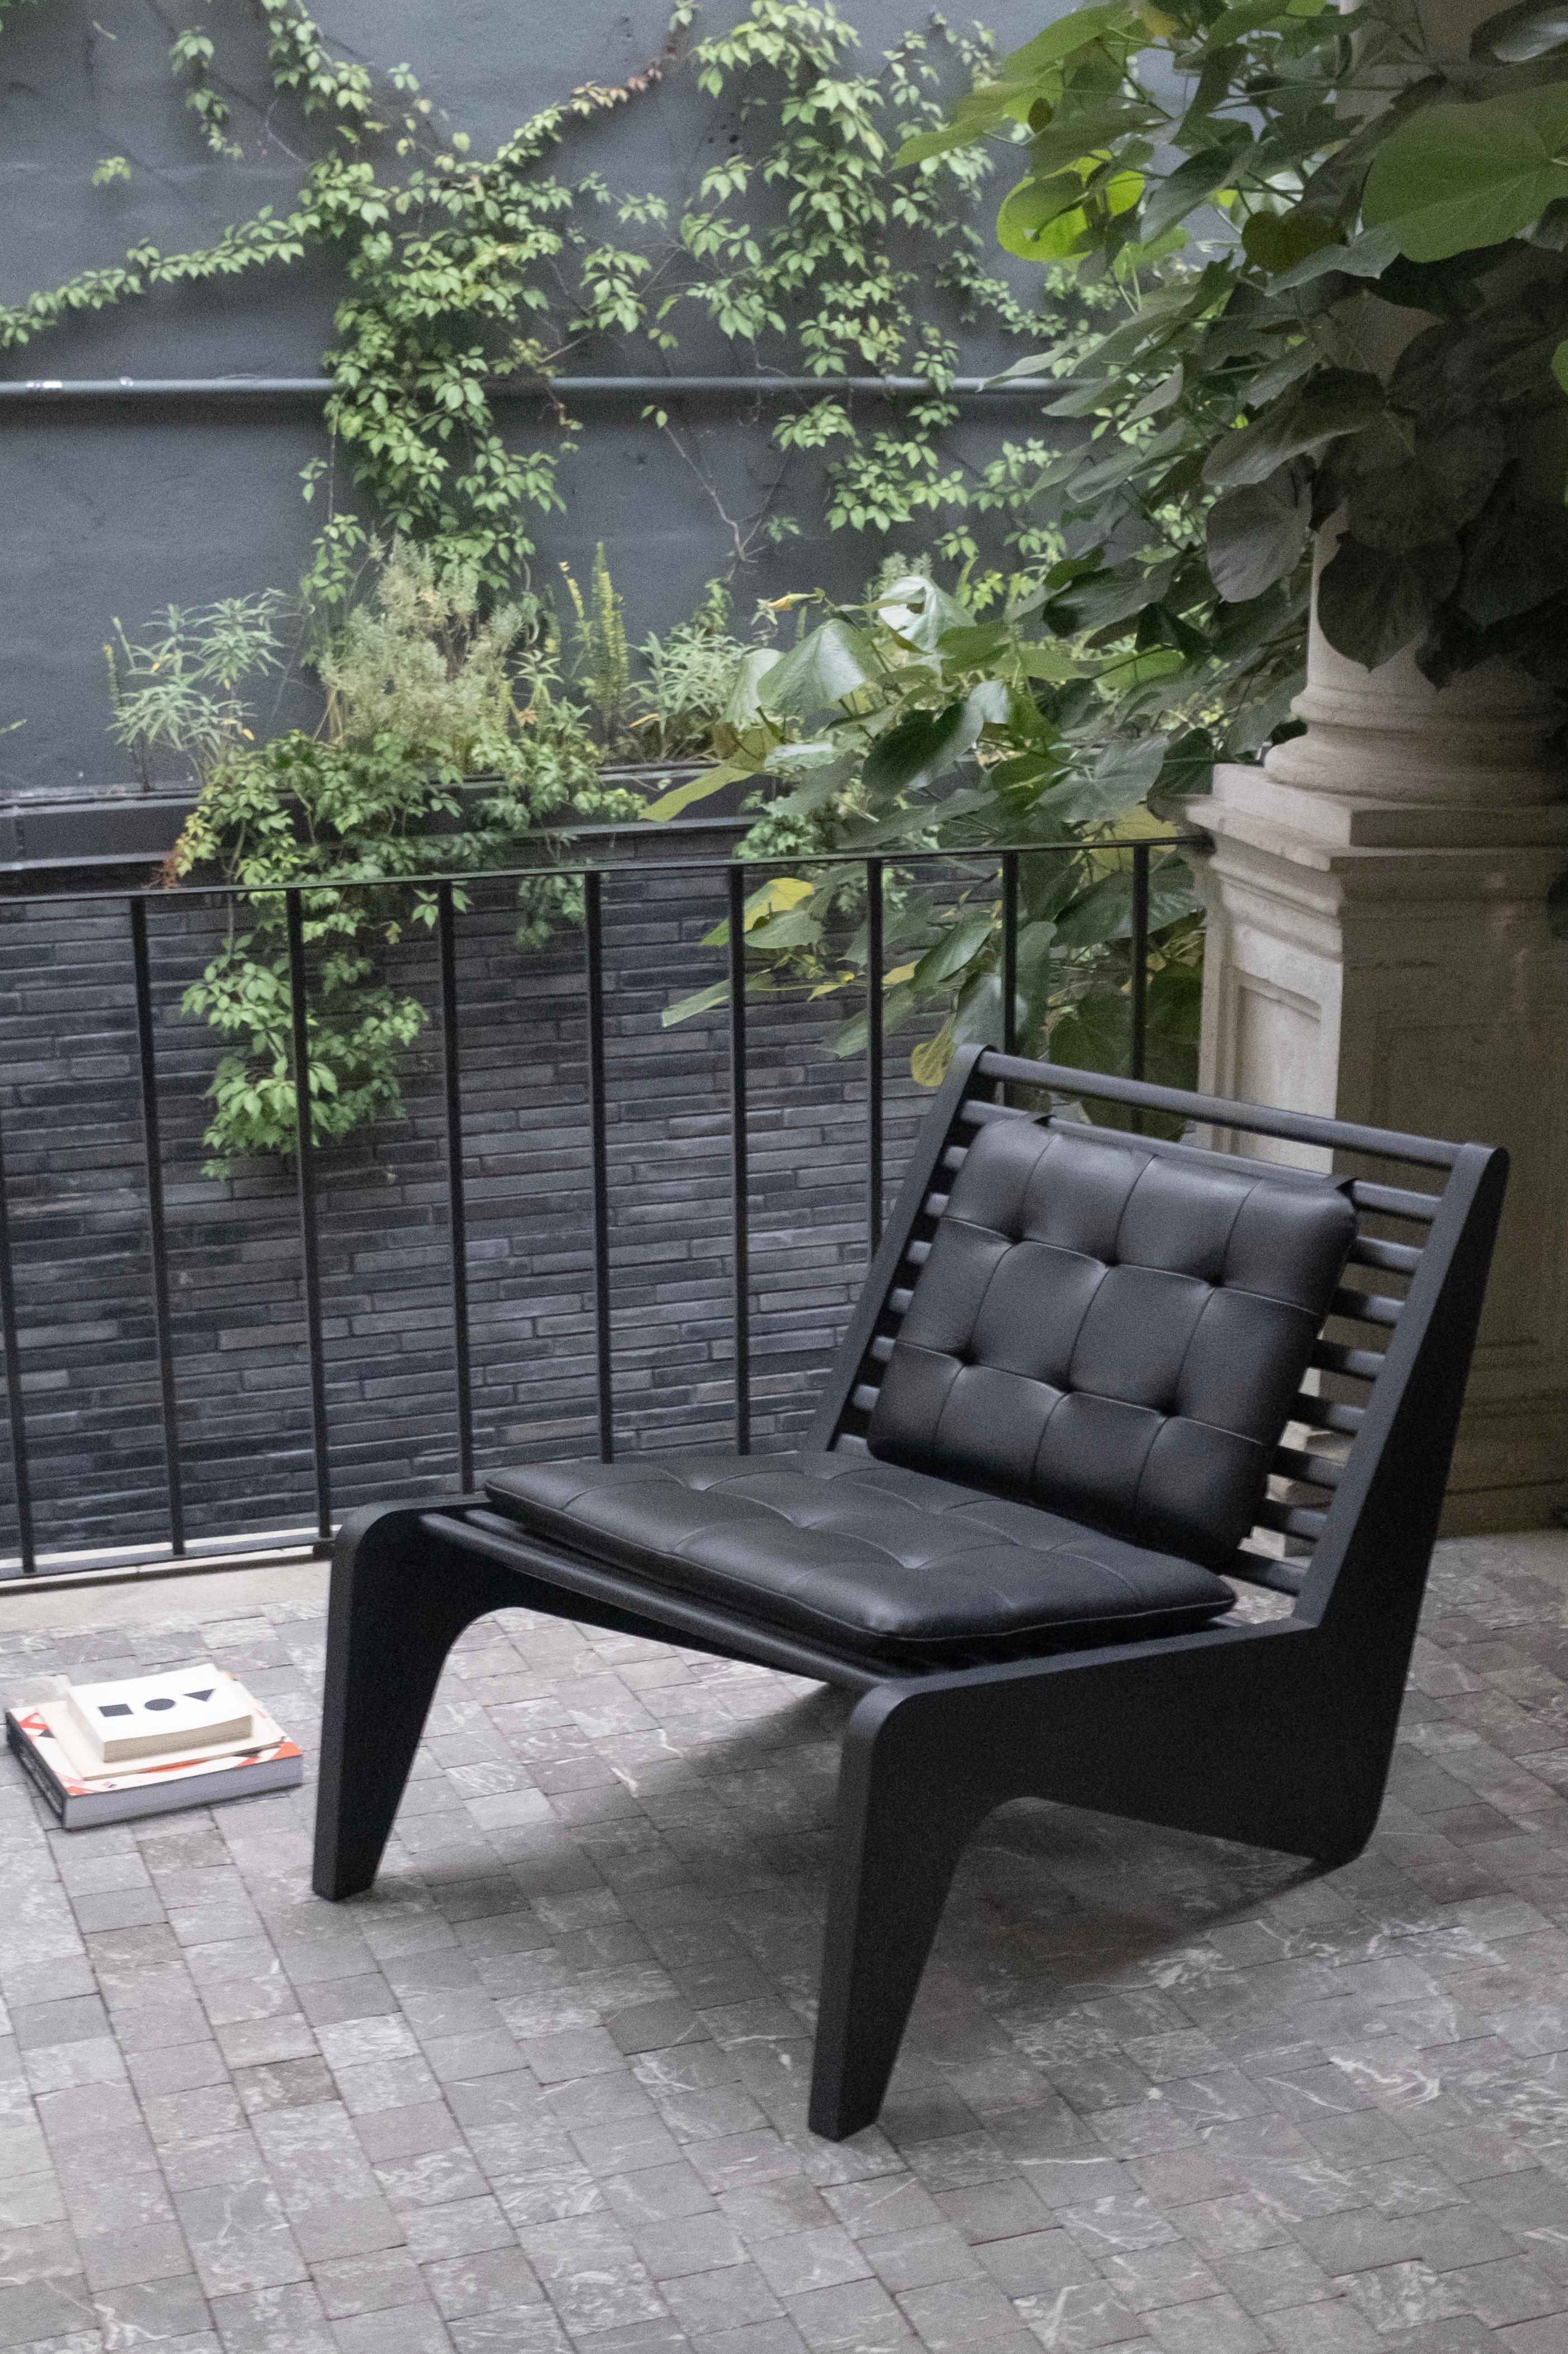 Black Ala lounge chair by Atra Design
Dimensions: D 50 x W 46.9 x H 76.9 cm
Materials: leather pads, mahogany
Available in mahogany or teak. Available in other color.

Atra Design
We are Atra, a furniture brand produced by Atra form a mexico